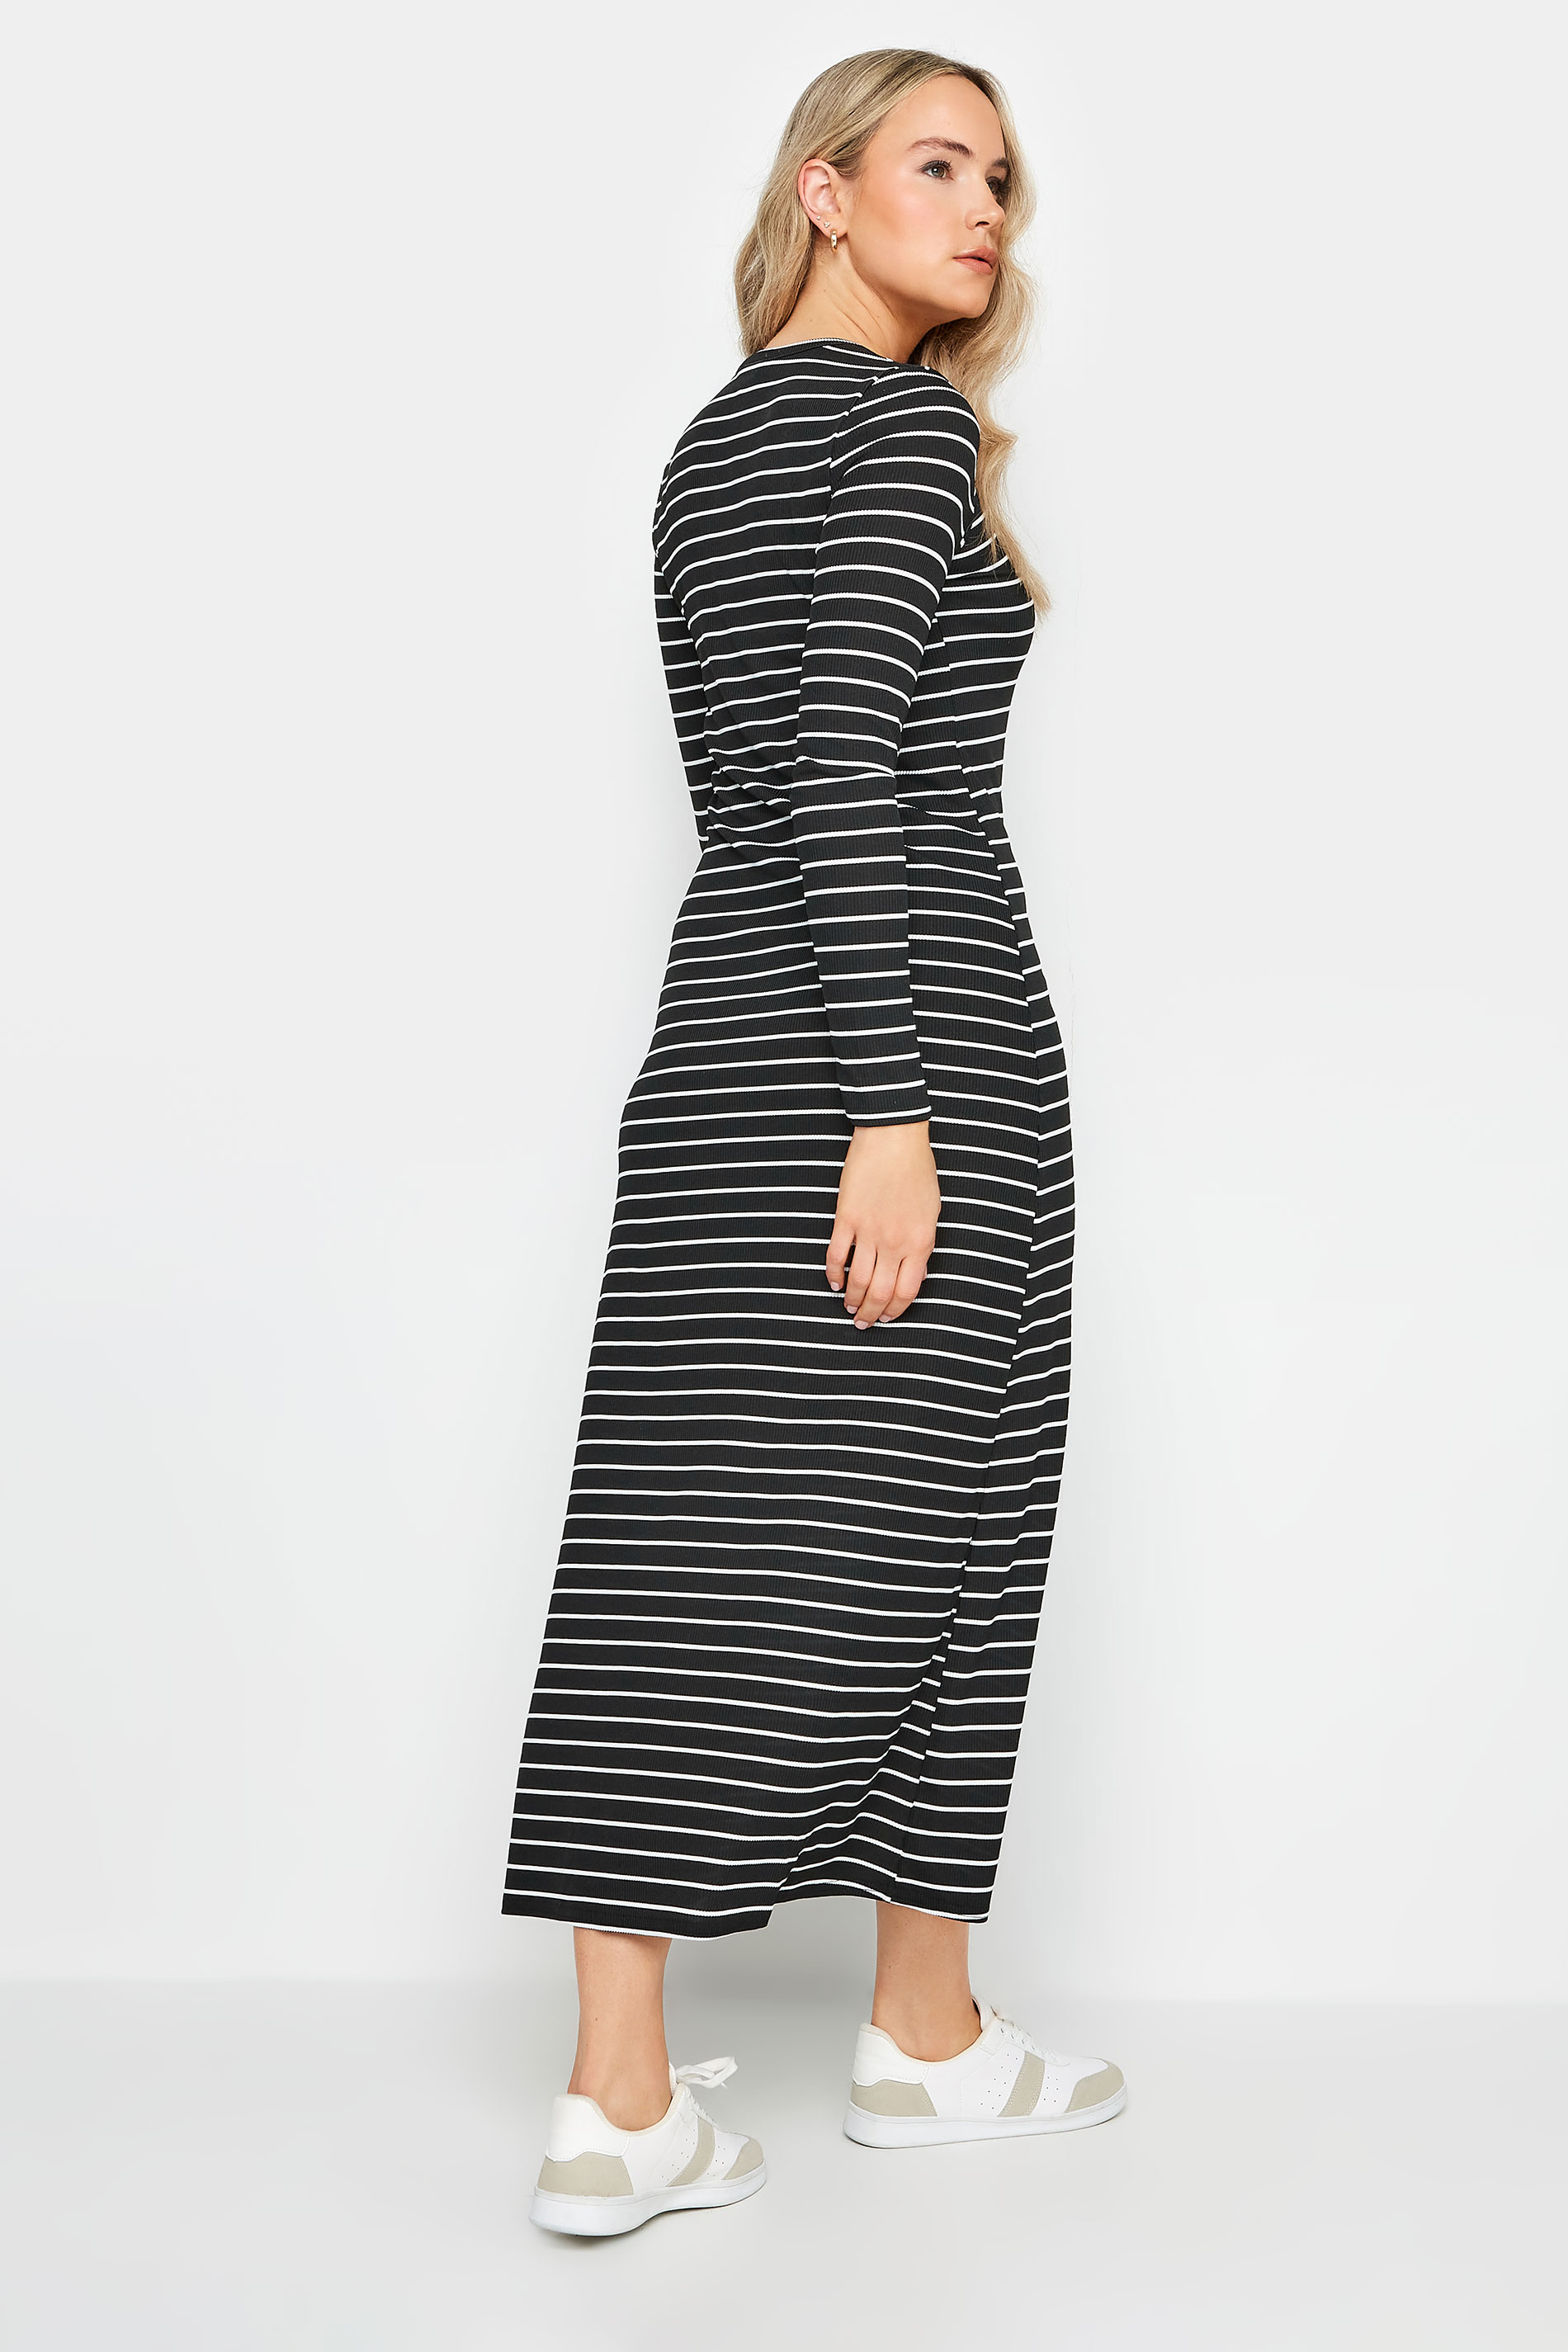 LTS Tall Black & White Stripe Ribbed Midi Dress | Long Tall Sally  3